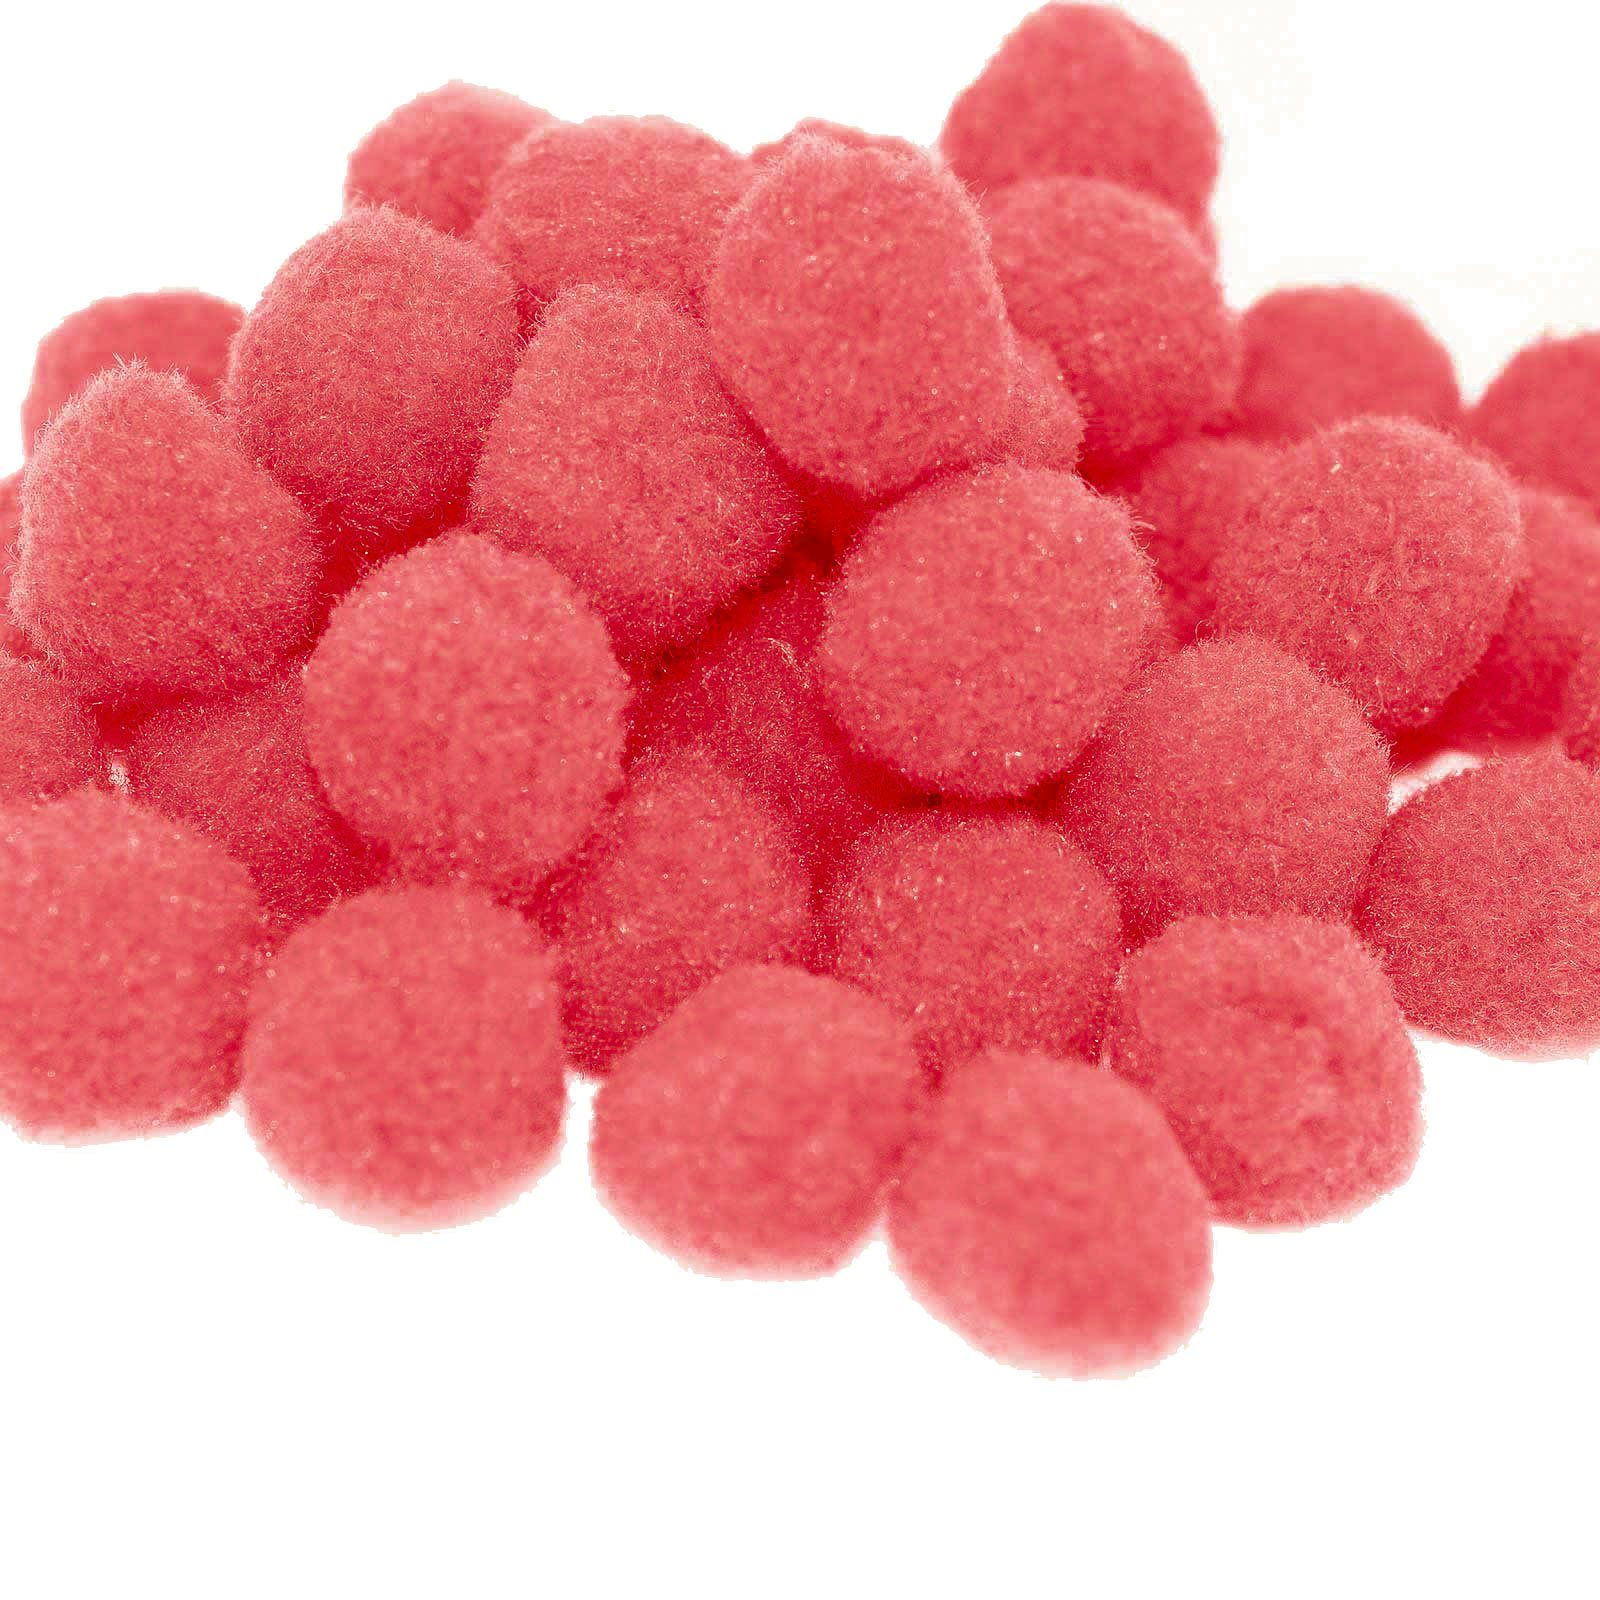 maDDma Pompon 100 Pompons, 15mm, Farben pink oder Farbmix, kreativ Basteln, zum